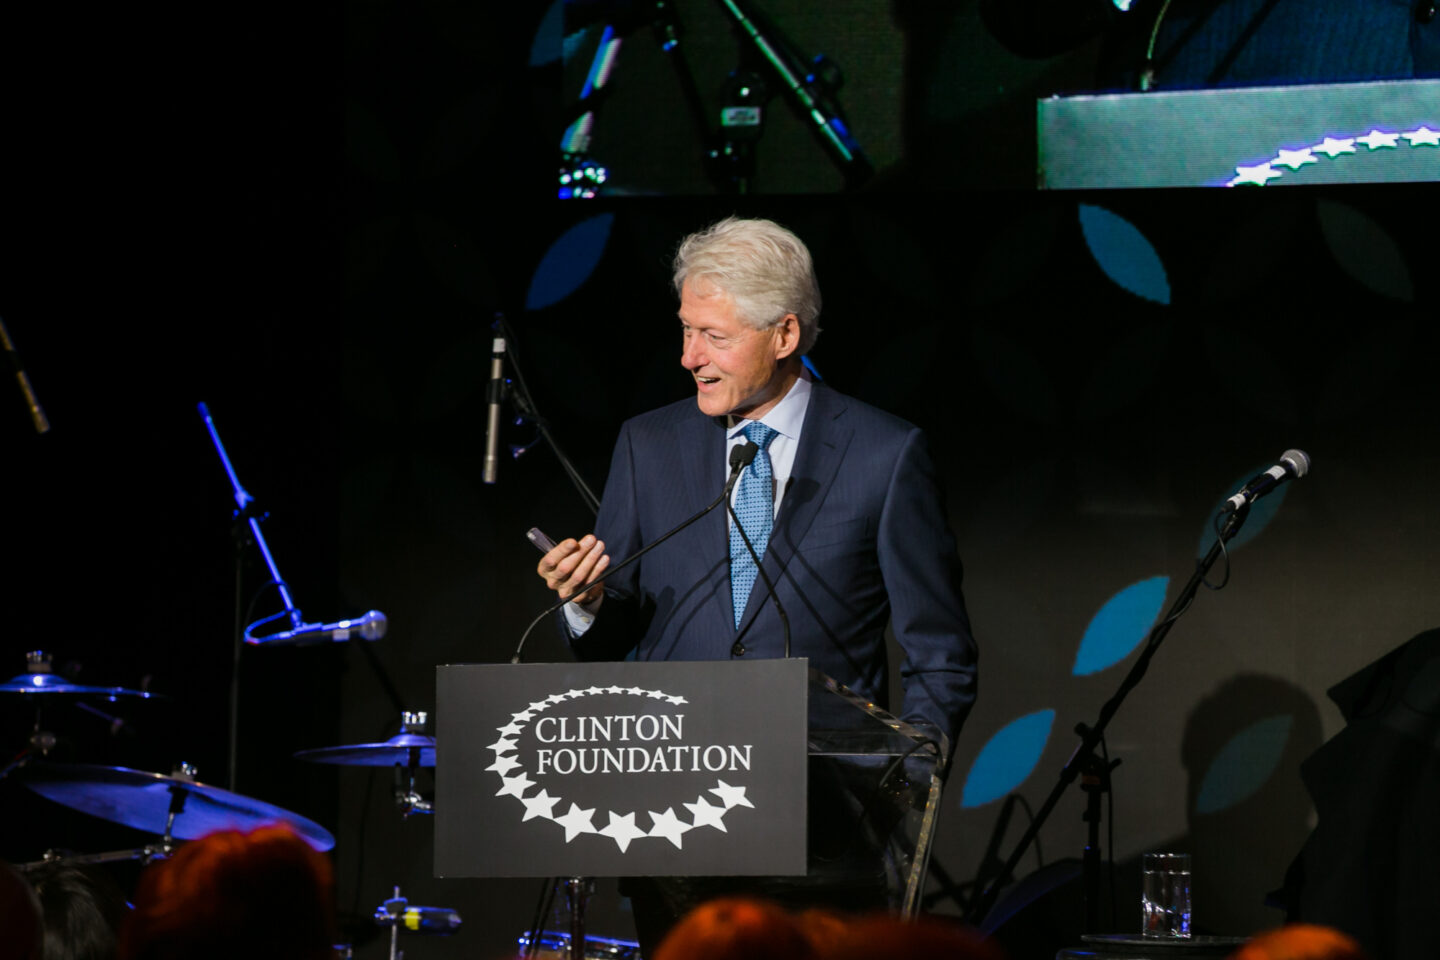 President Clinton speaks at lectern.